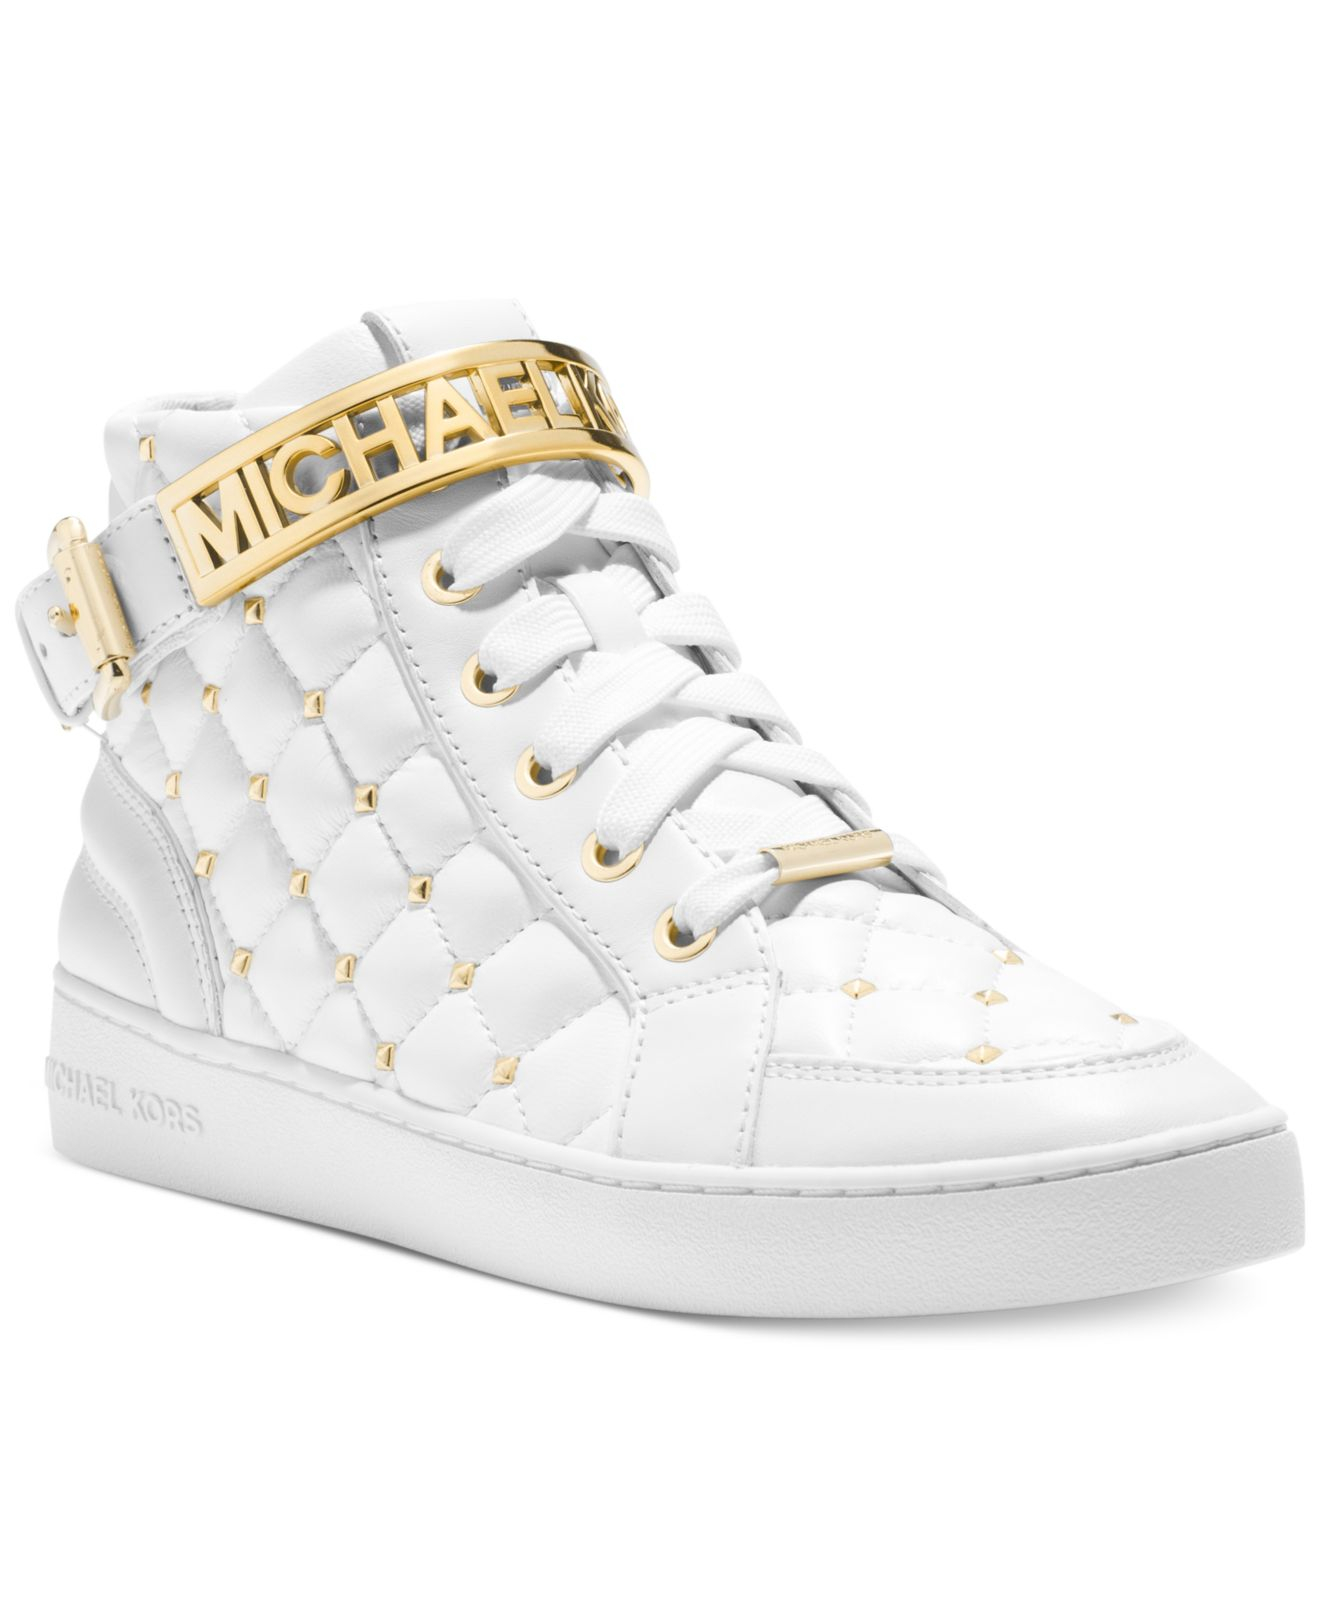 Michael Kors Michael Essex High Top Sneakers in White - Lyst